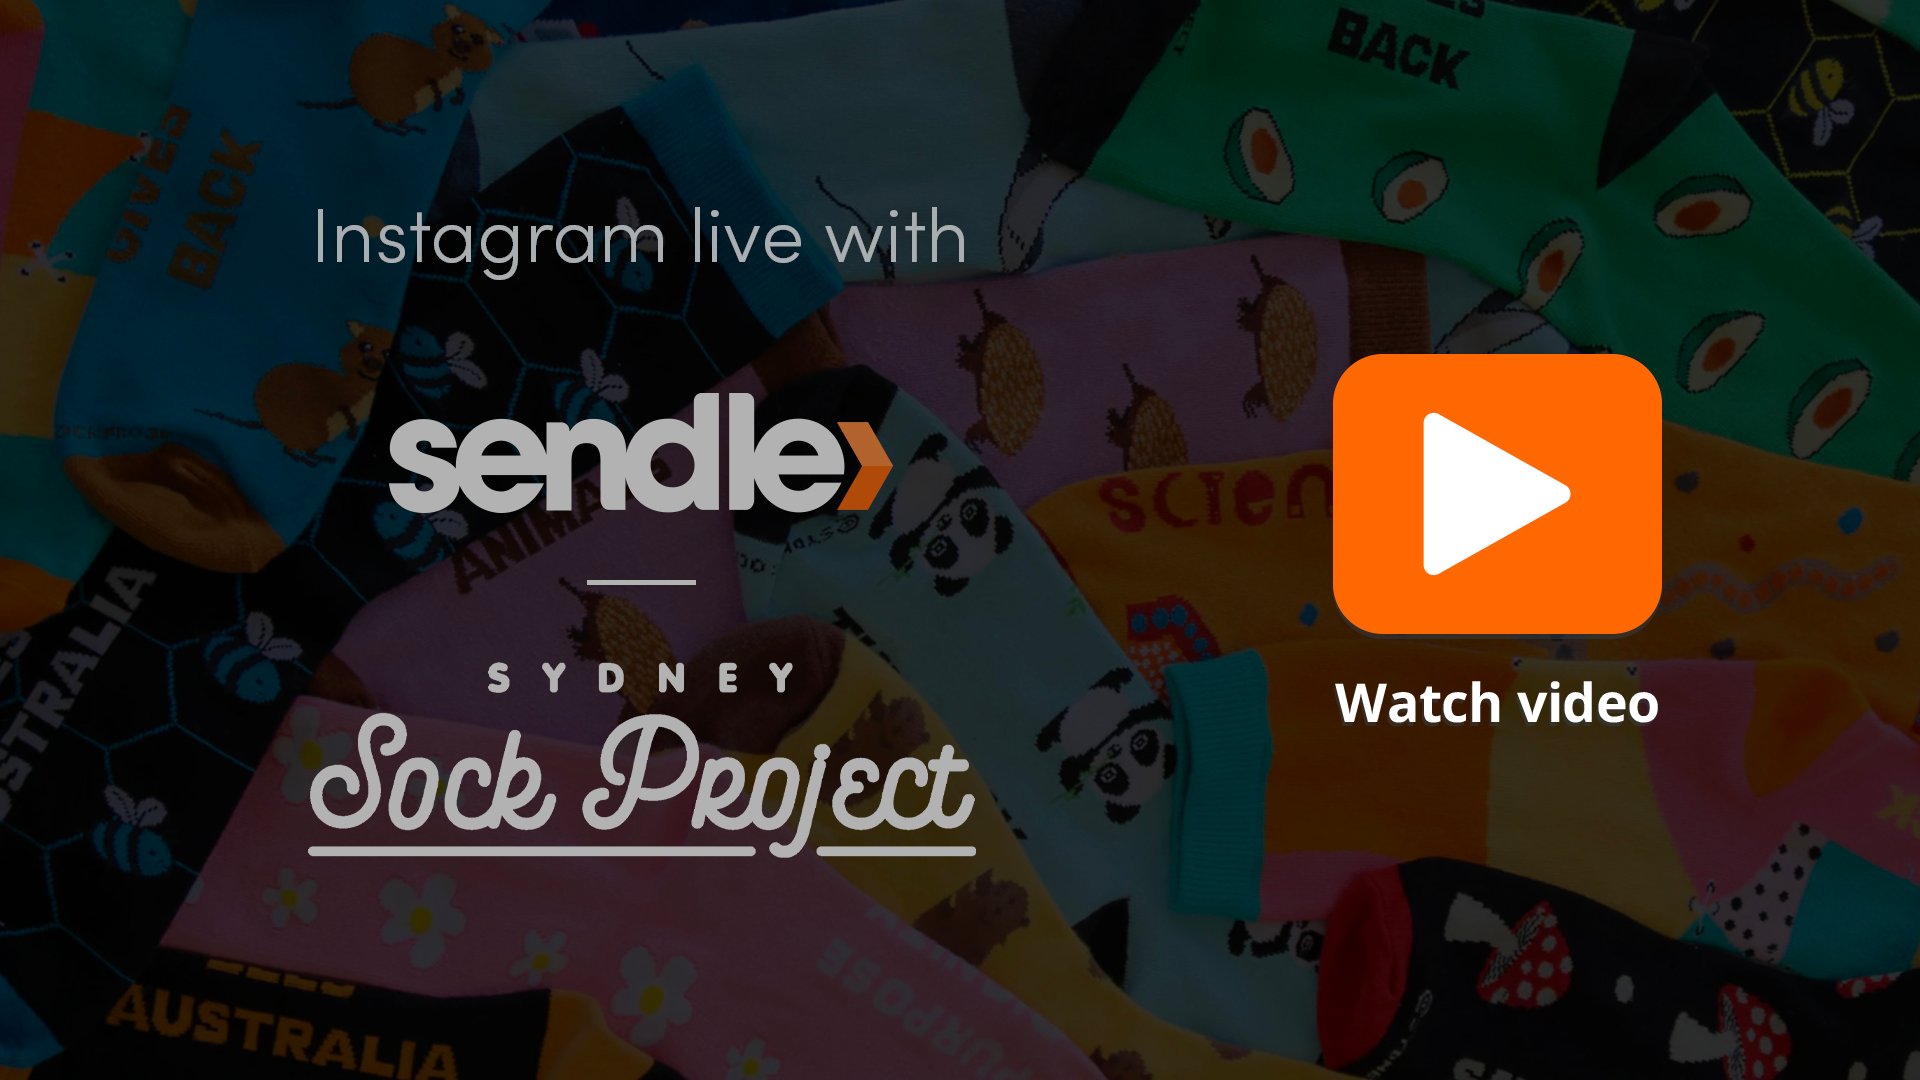 sendle-sydney-sock-project-watch-instagram-live-video-thumbnail